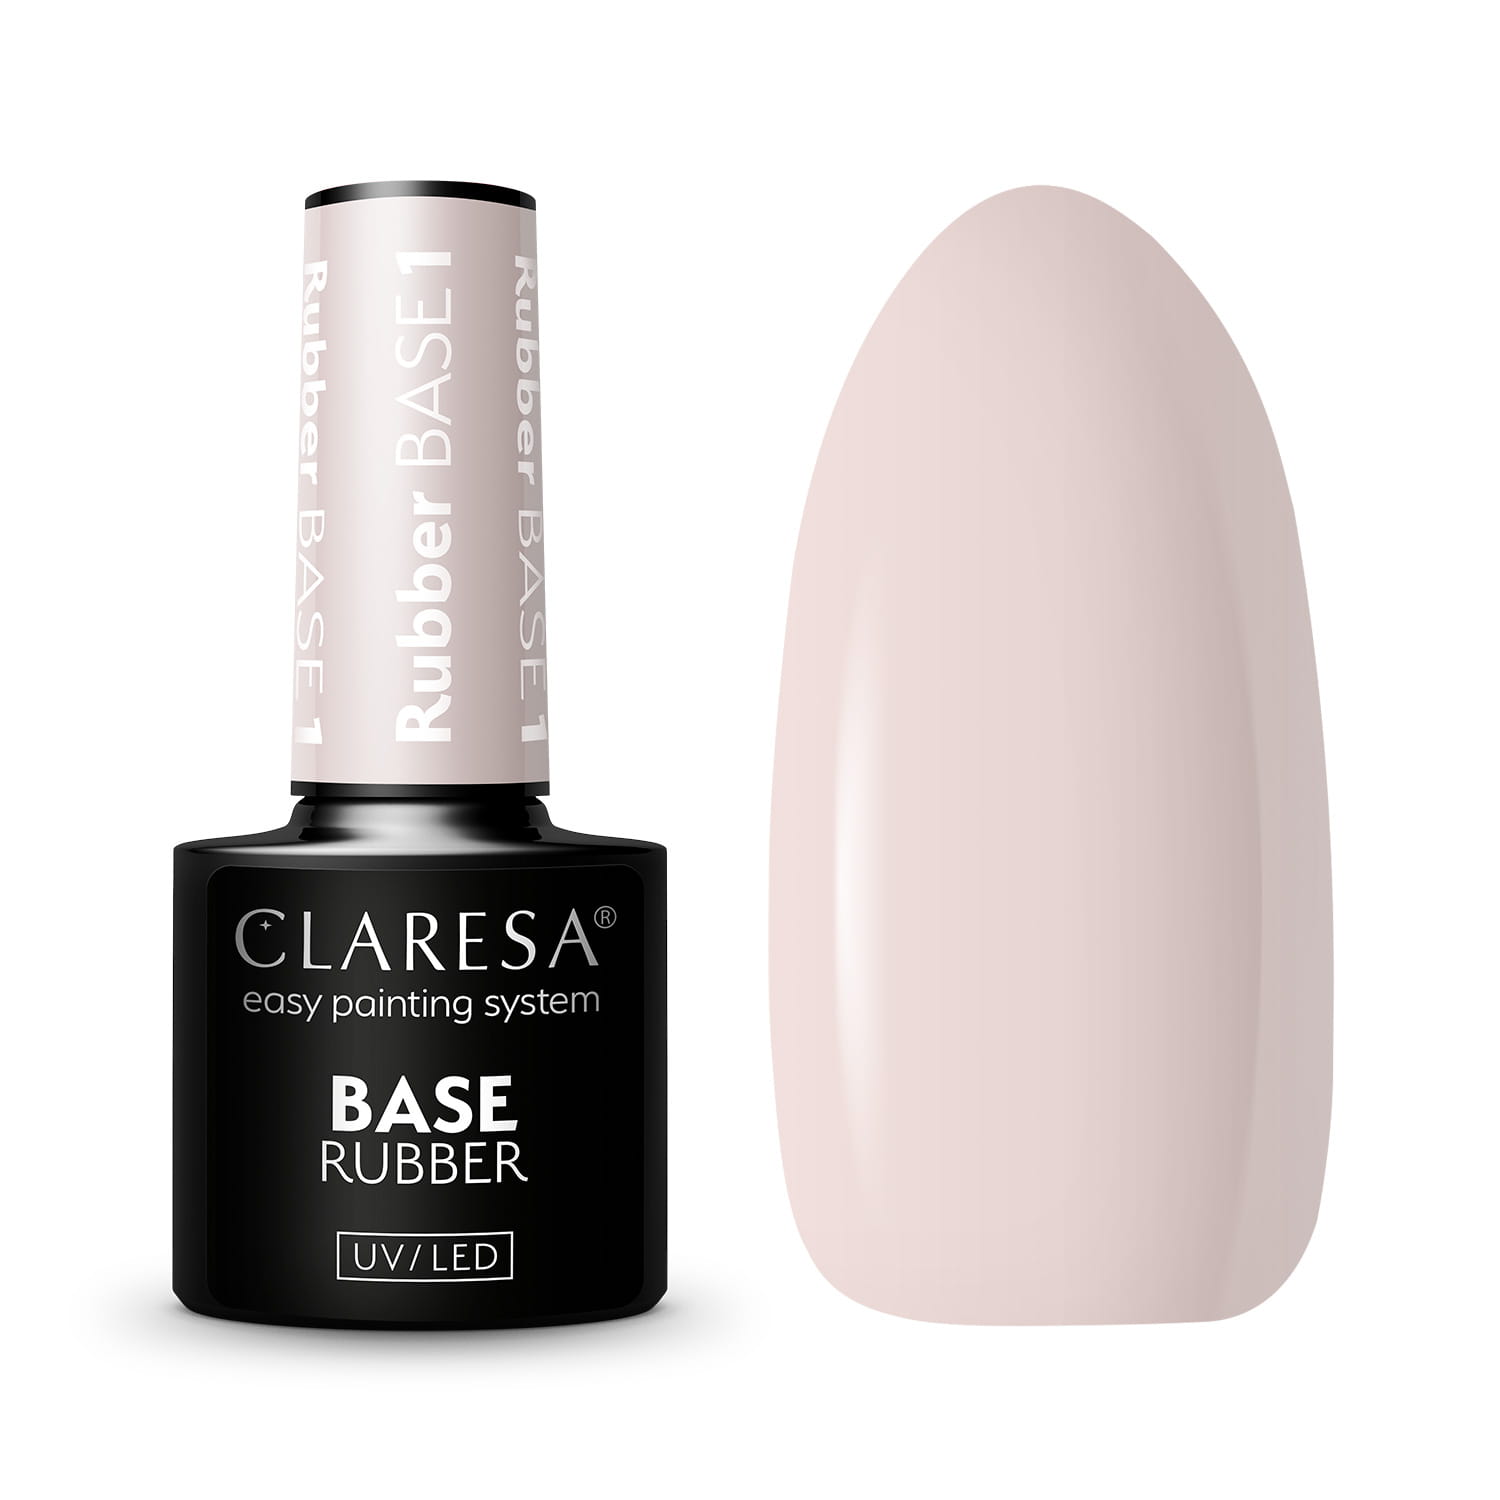 CLARESA Rubber base 1 - 5g